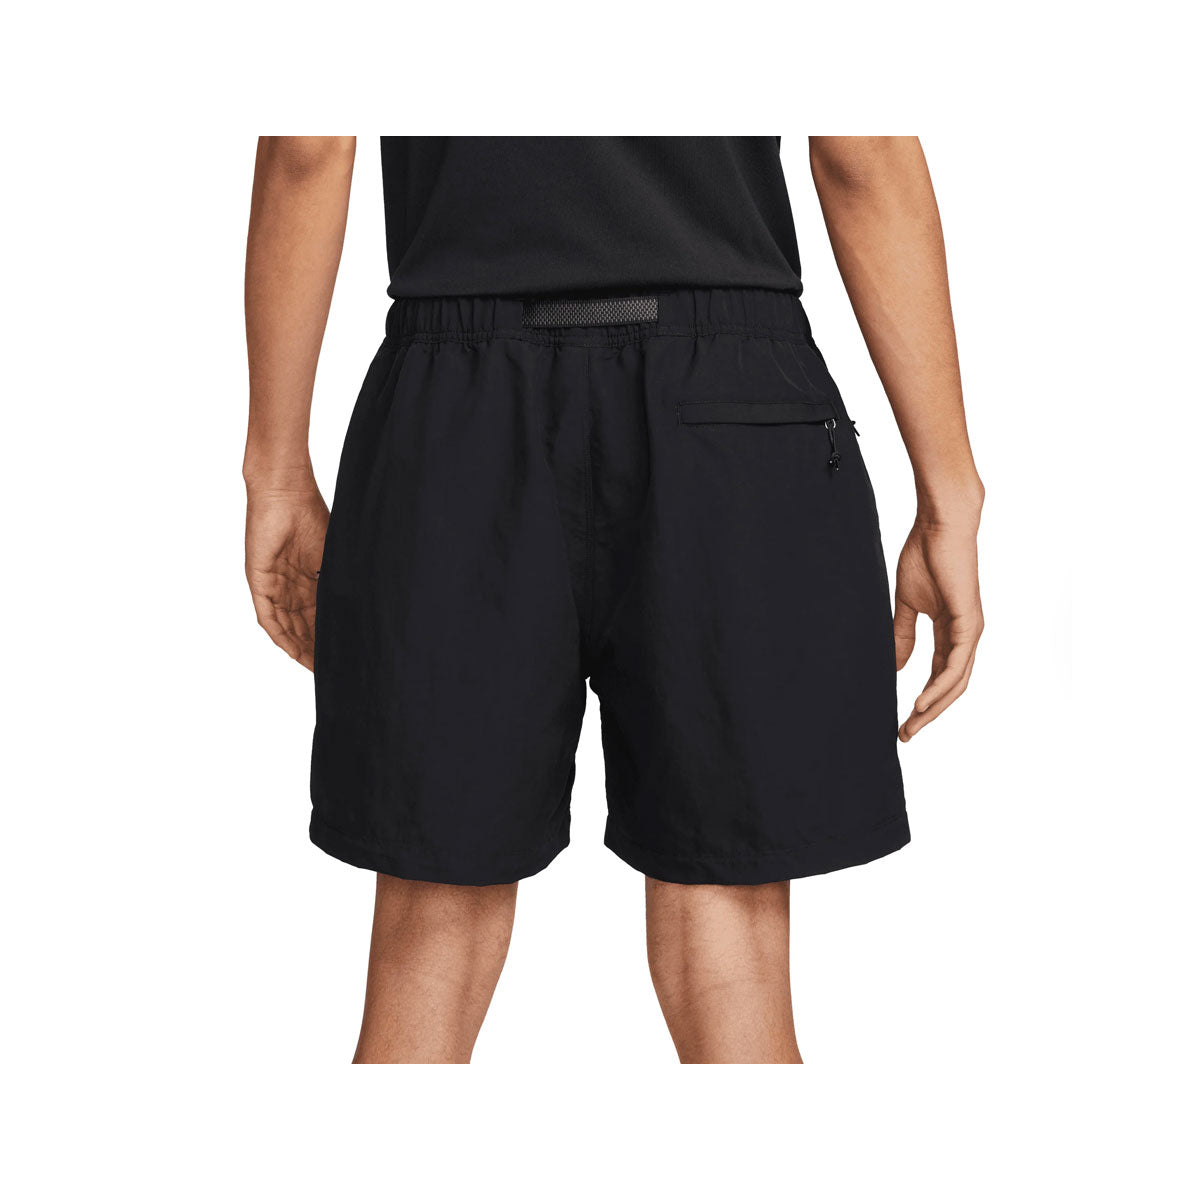 Nike Men's ACG Recycled Material Black Nylon Shorts